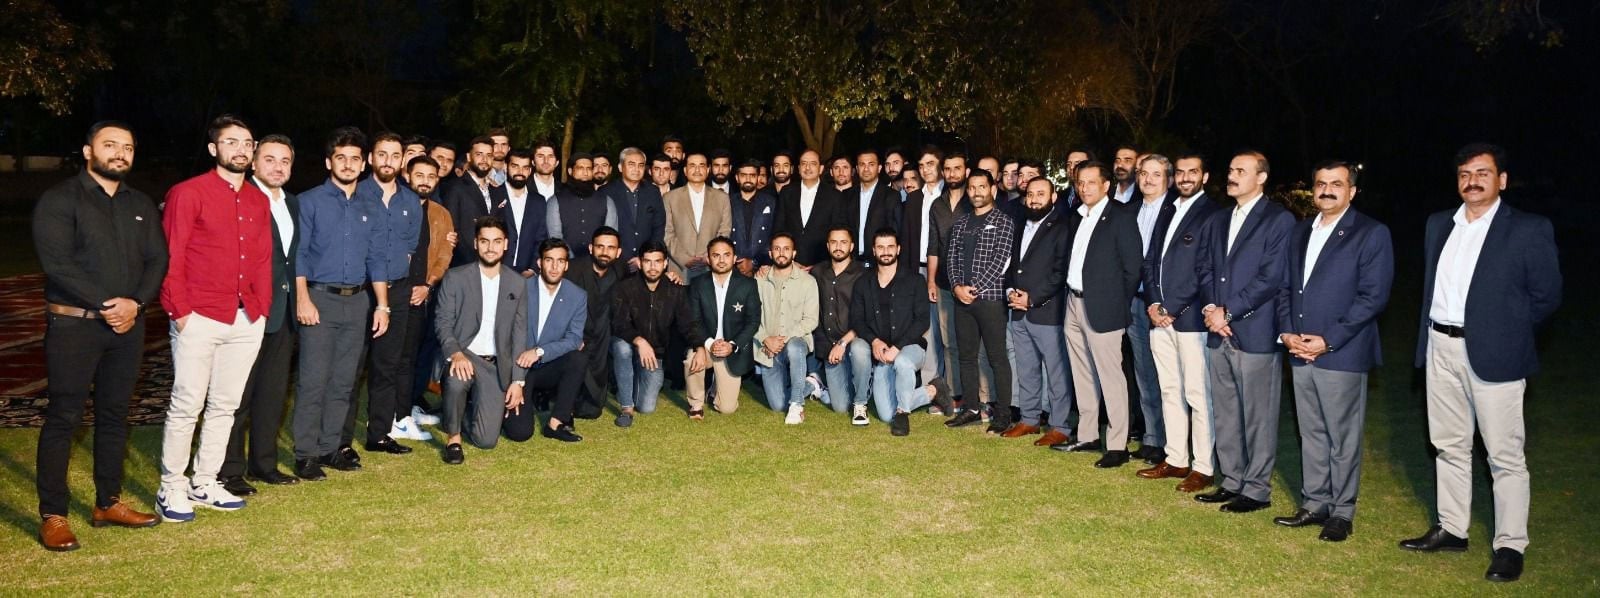 Pakistan cricket team platers with the COAS General Asim Munir. — ISPR